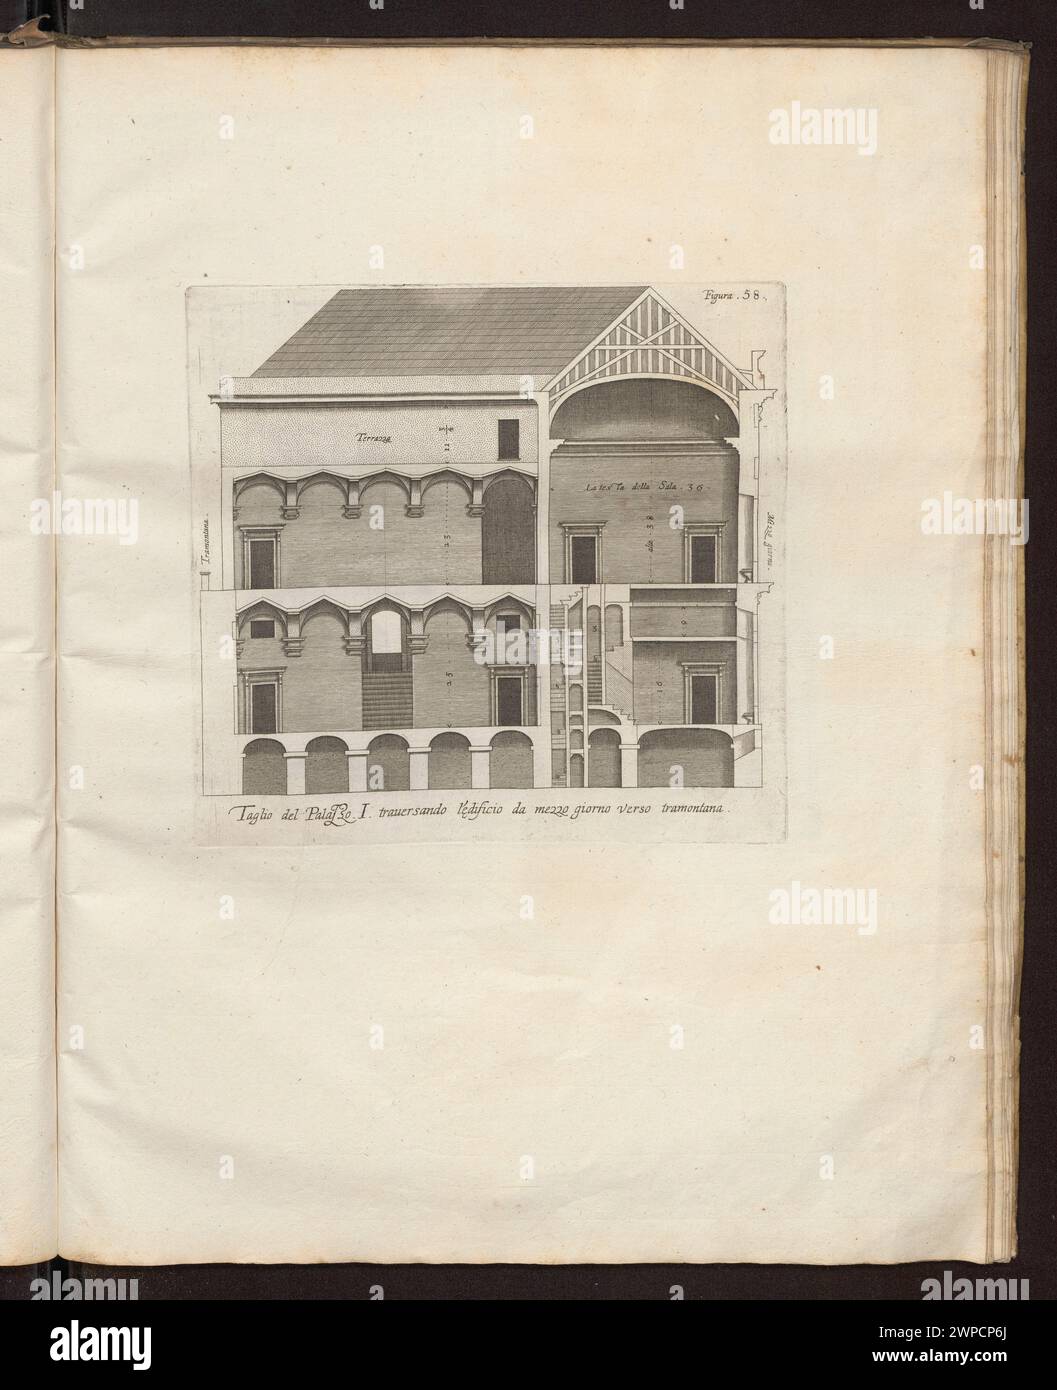 Abbildung 58: Taglio del Palazzo aus dem Album Palazzi di Genova; Ryckemans, Nicolaes (ca. 1595-FL. Ca 1616-1626), Rubens, Peter Paul (1577-1640); 1622 (1622-00-00-1622-00-00); Stockfoto